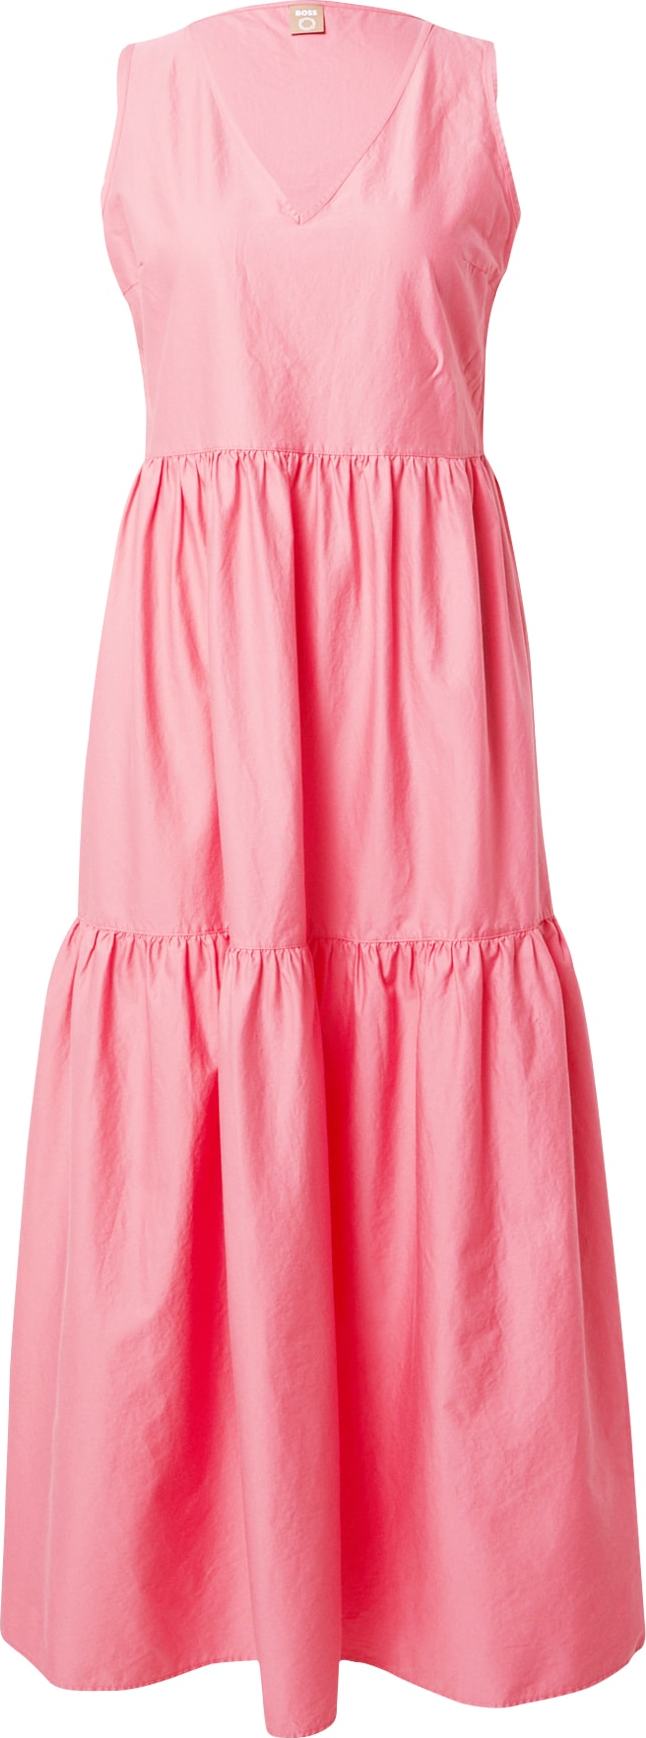 BOSS Orange Šaty 'Ditesta' pink